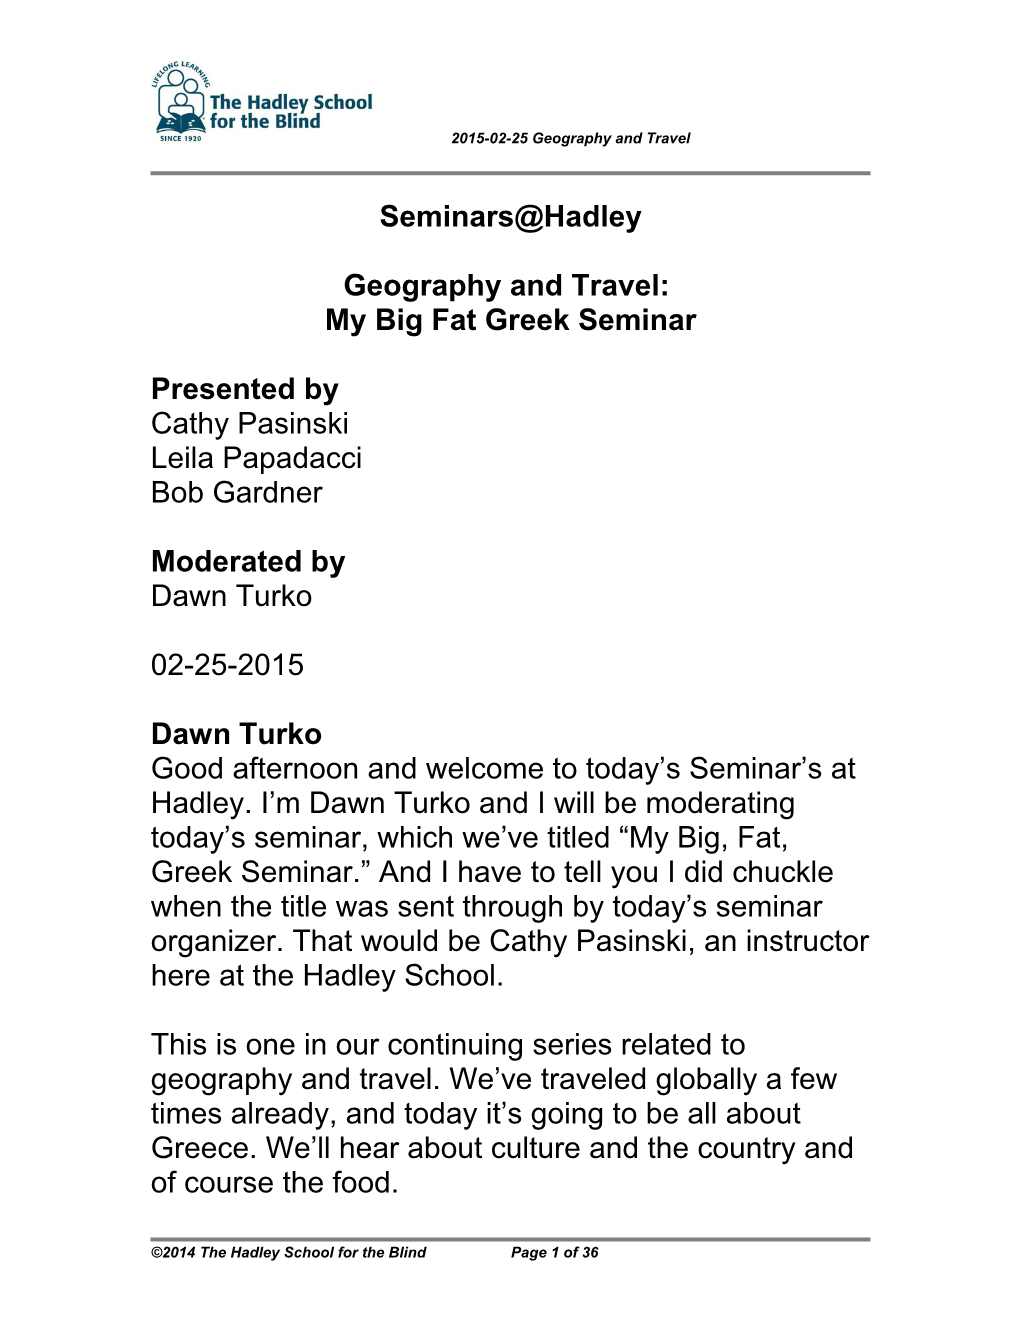 Geography and Travel: My Big Fat Greek Seminar